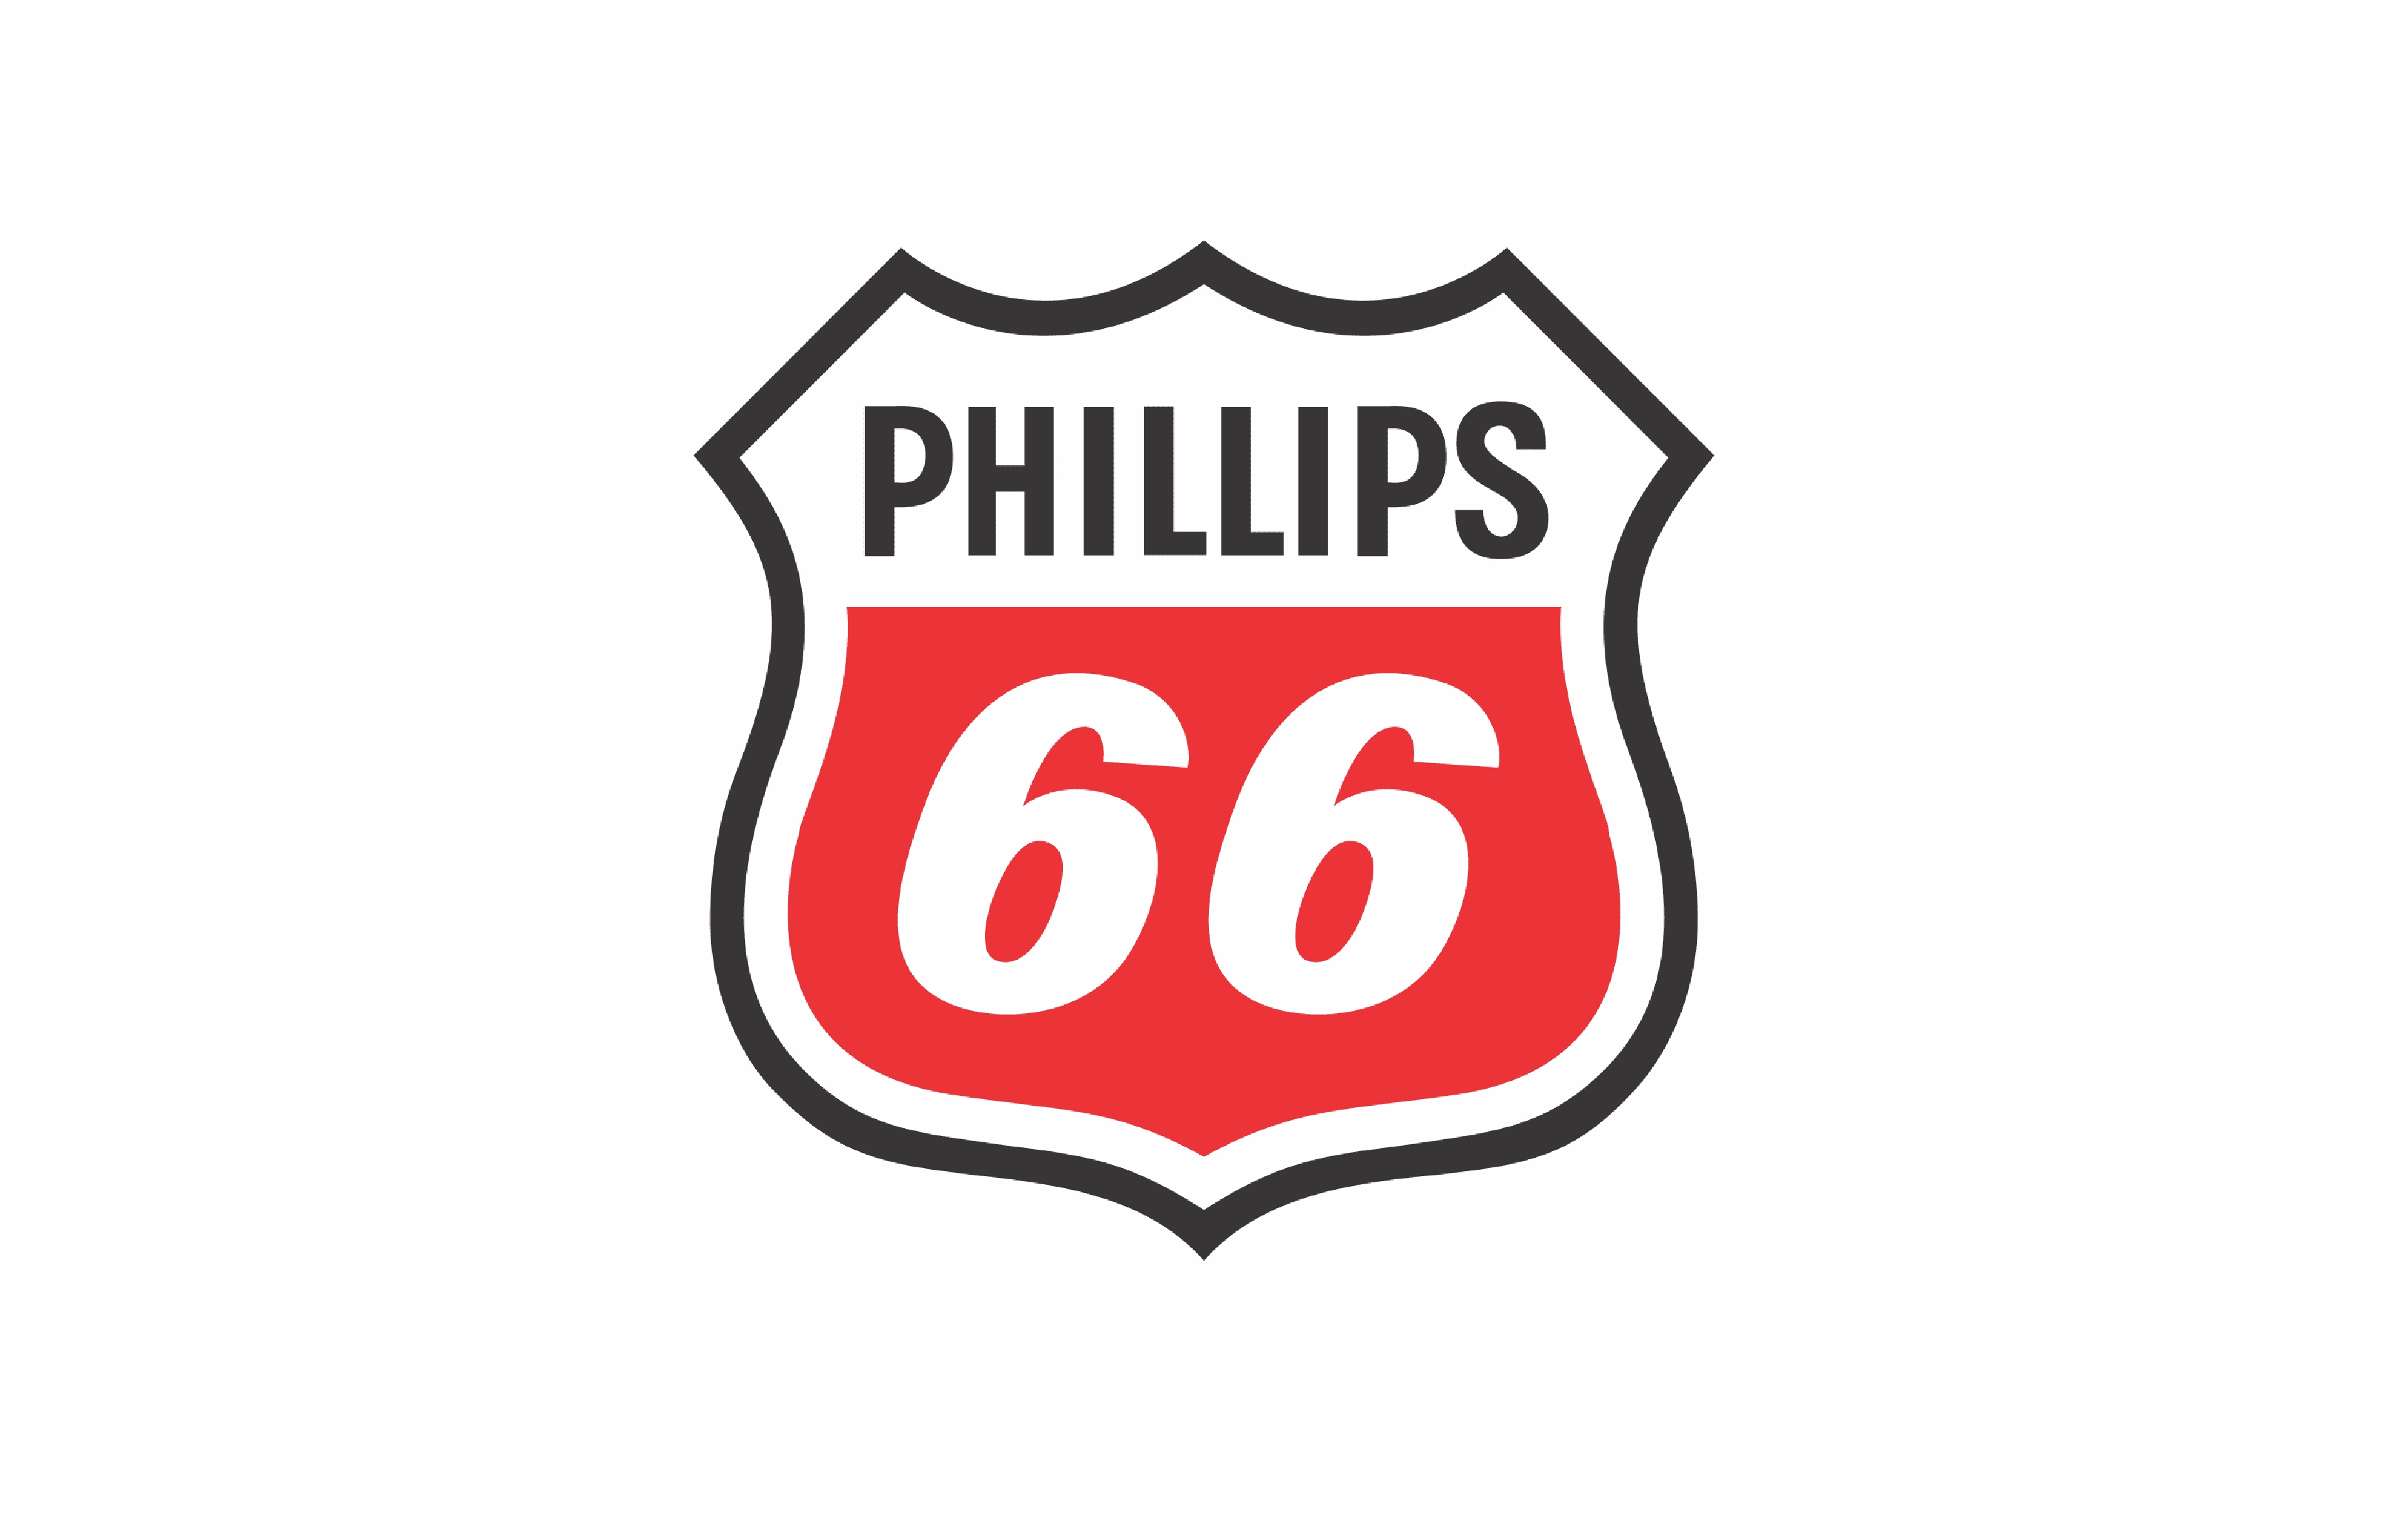 Phillips 66 - Foundation